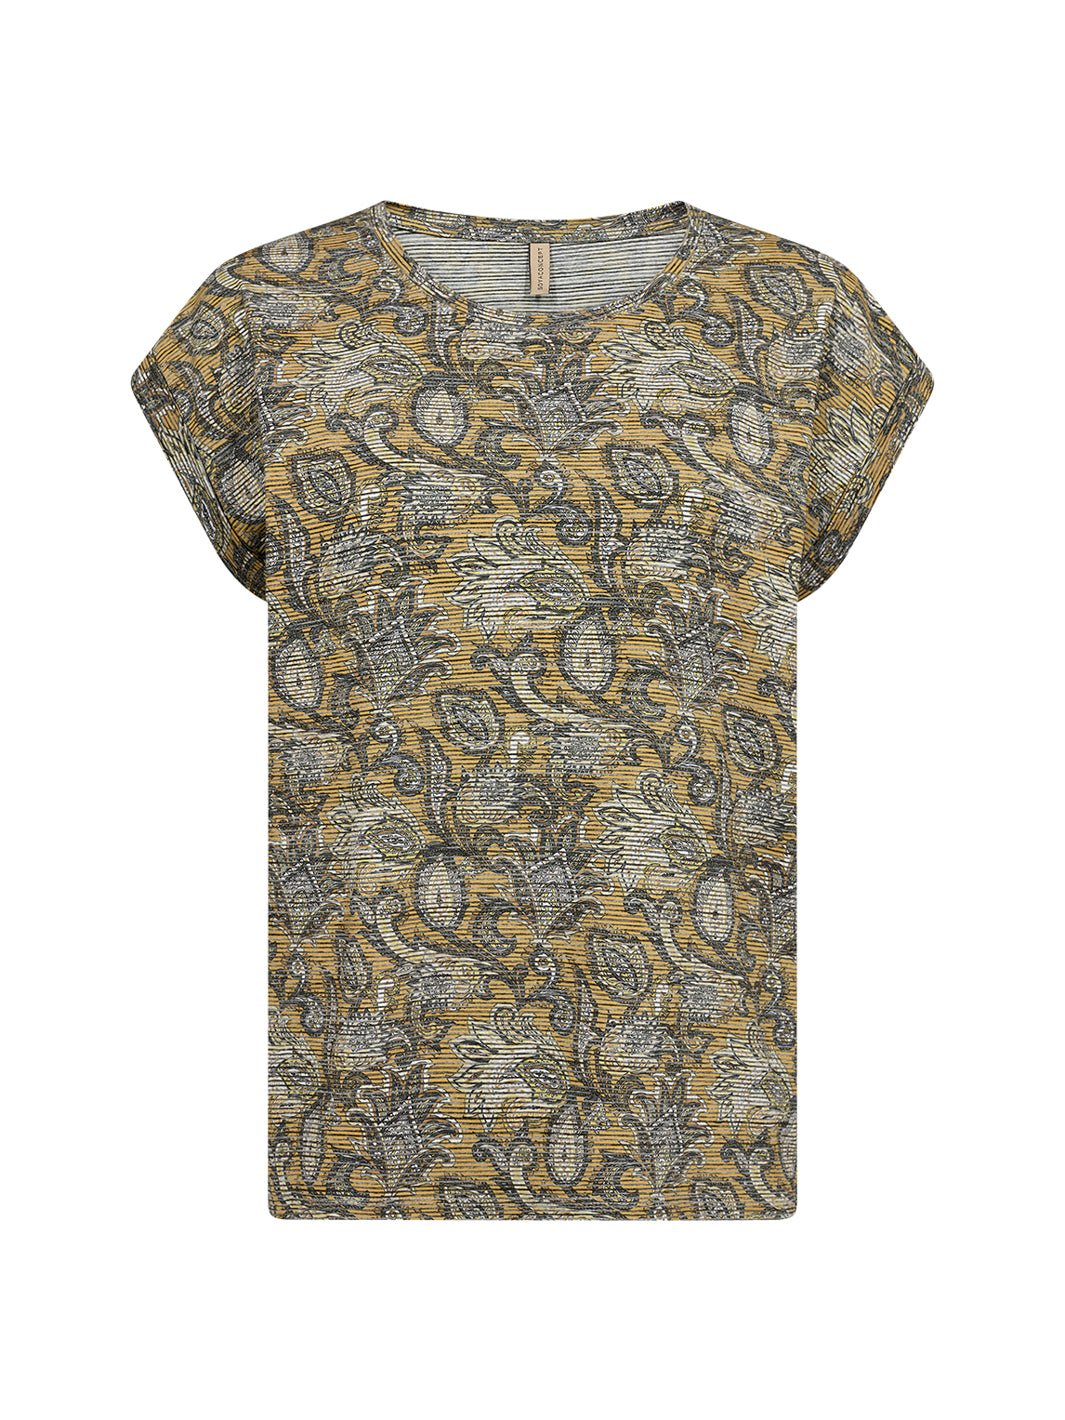 Soya Concept Galina 40 t-shirt yellow ocre - Online-Mode